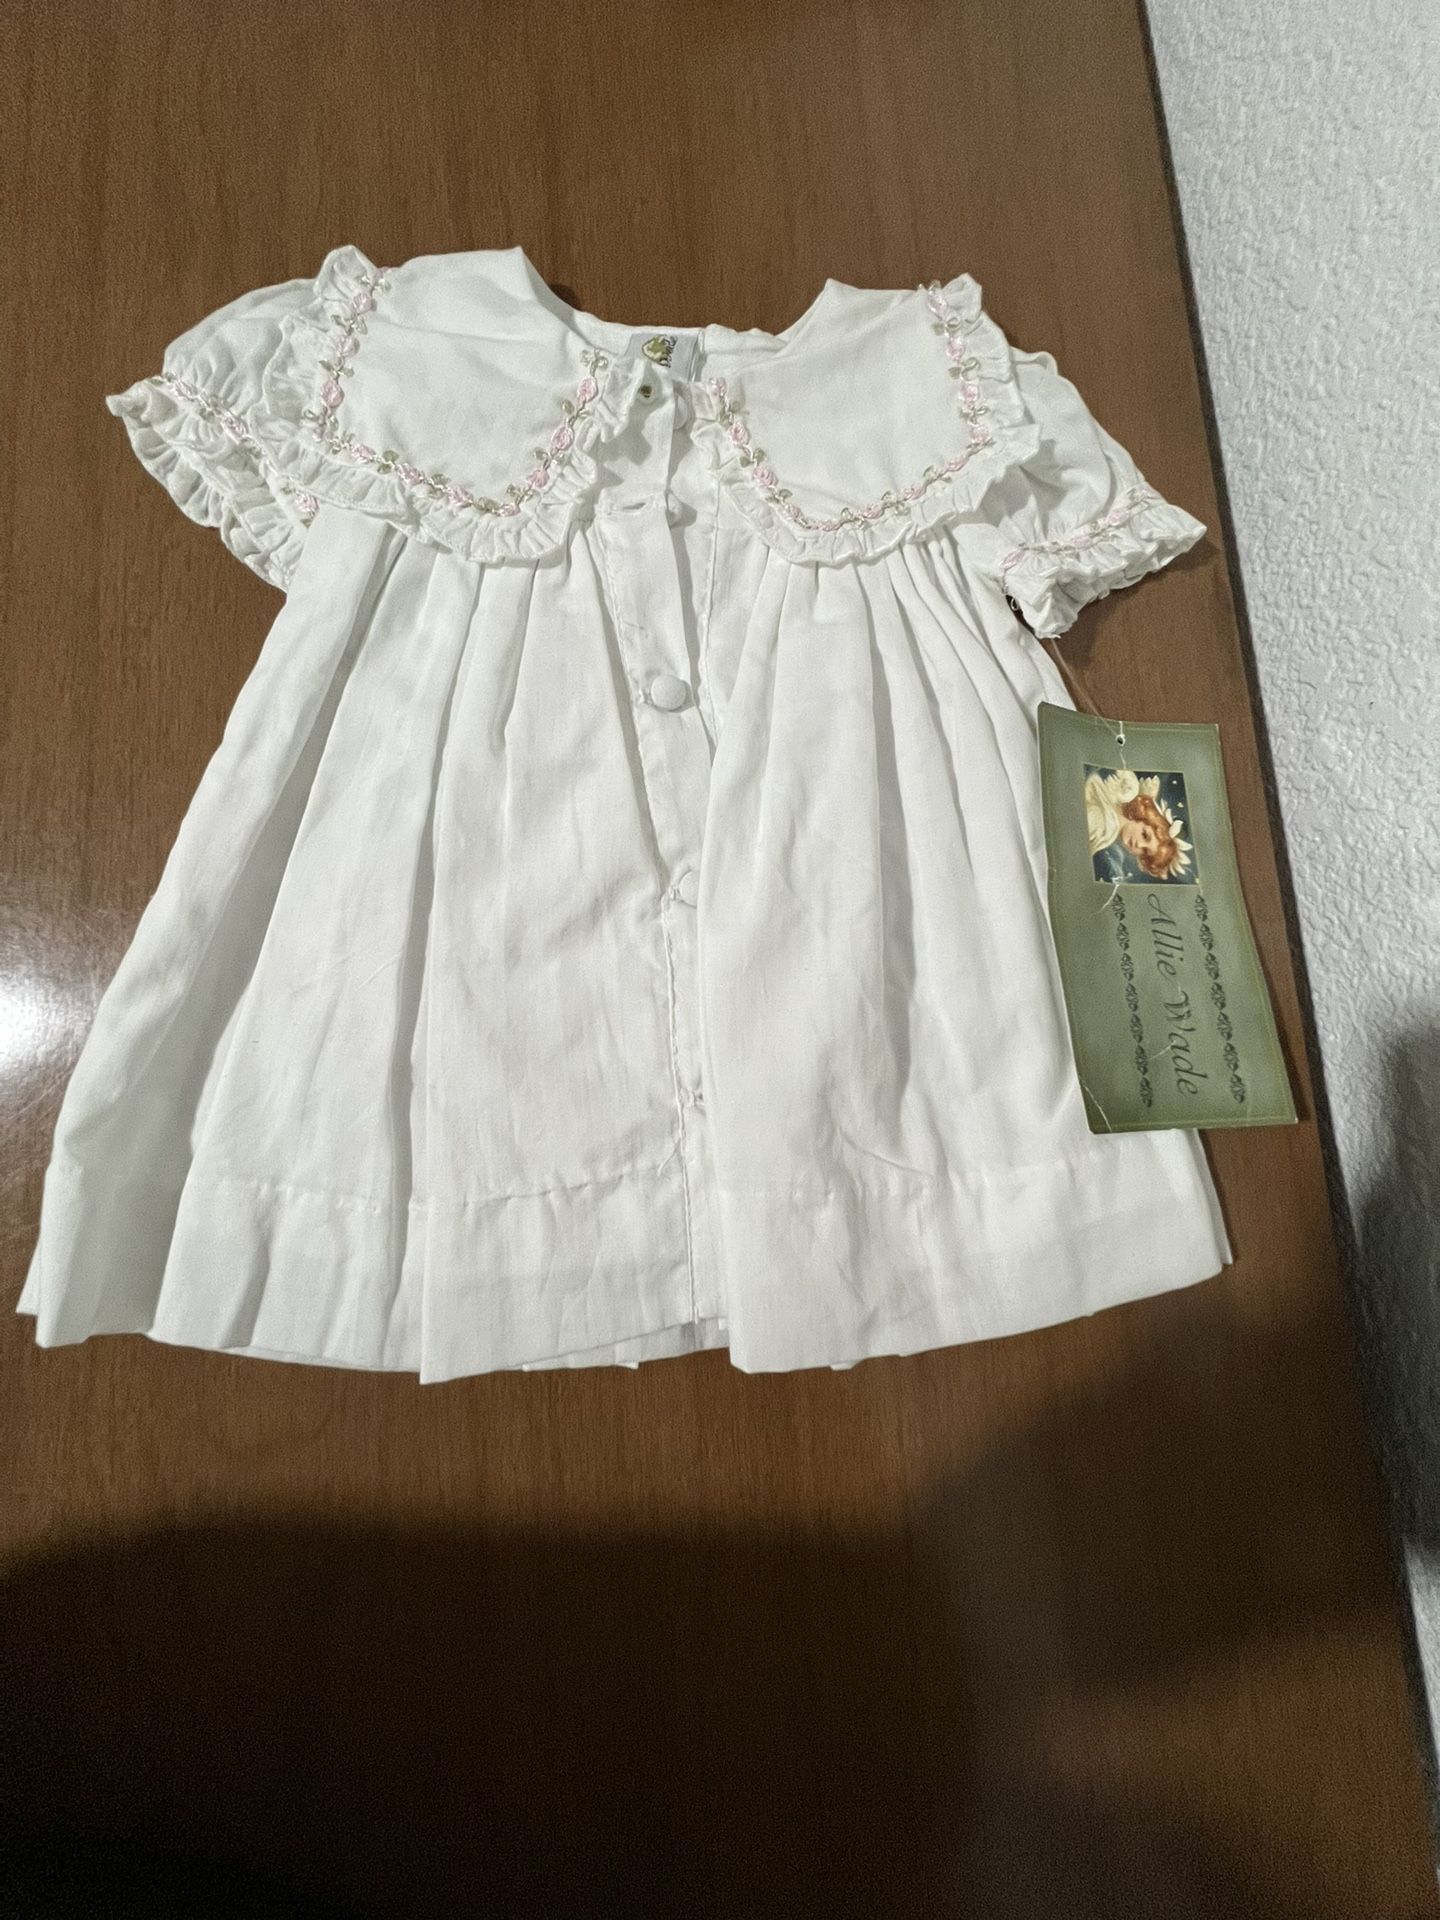 Baby dress  Allie Wade size 6 months  100% Cotton